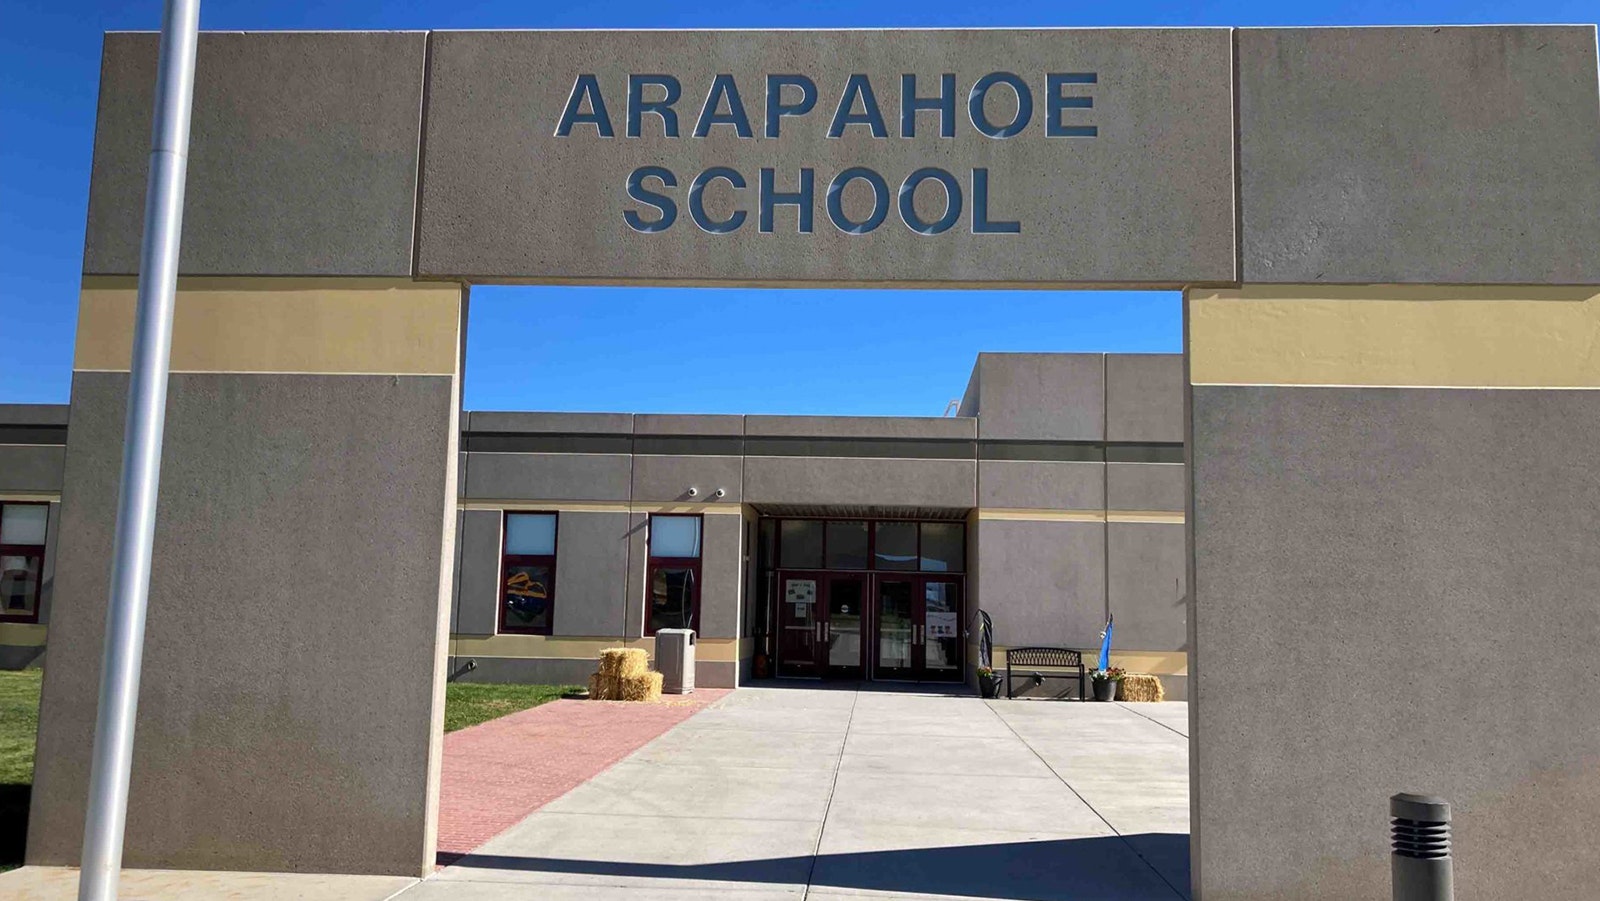 Arapahoe School front 7 21 23